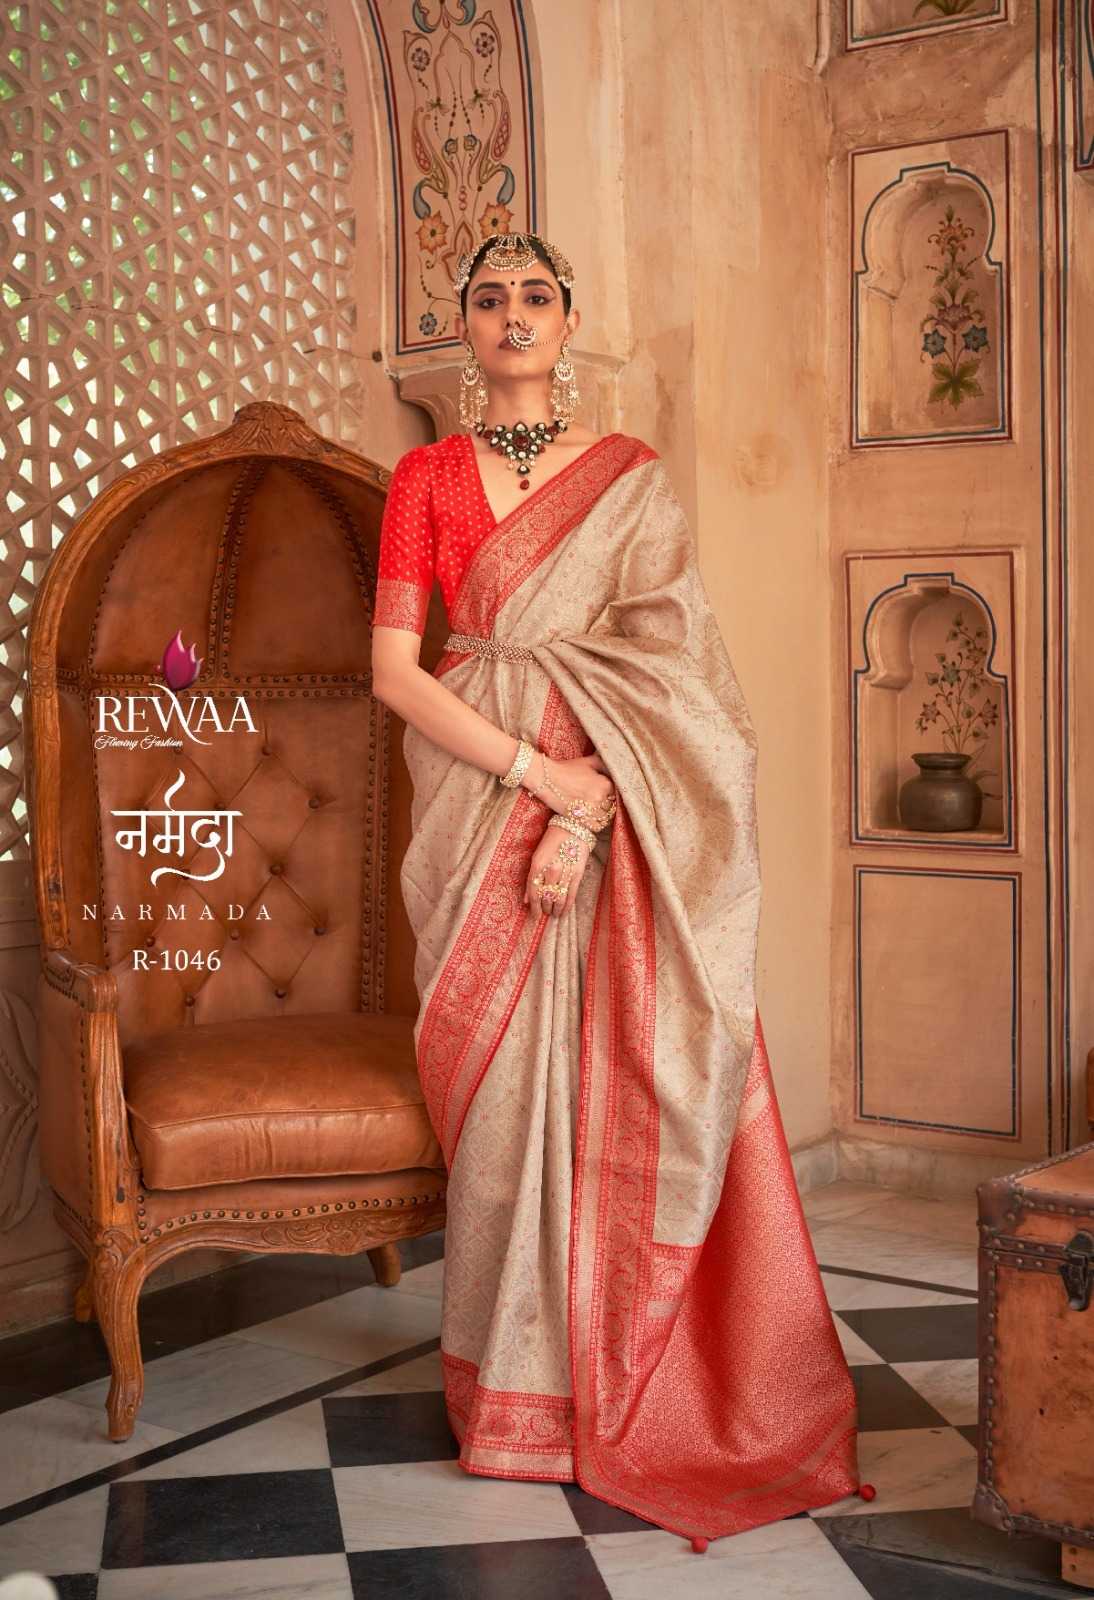 rewaa narmada 1046-1050 designer traditional wear banaras silk elegant saree